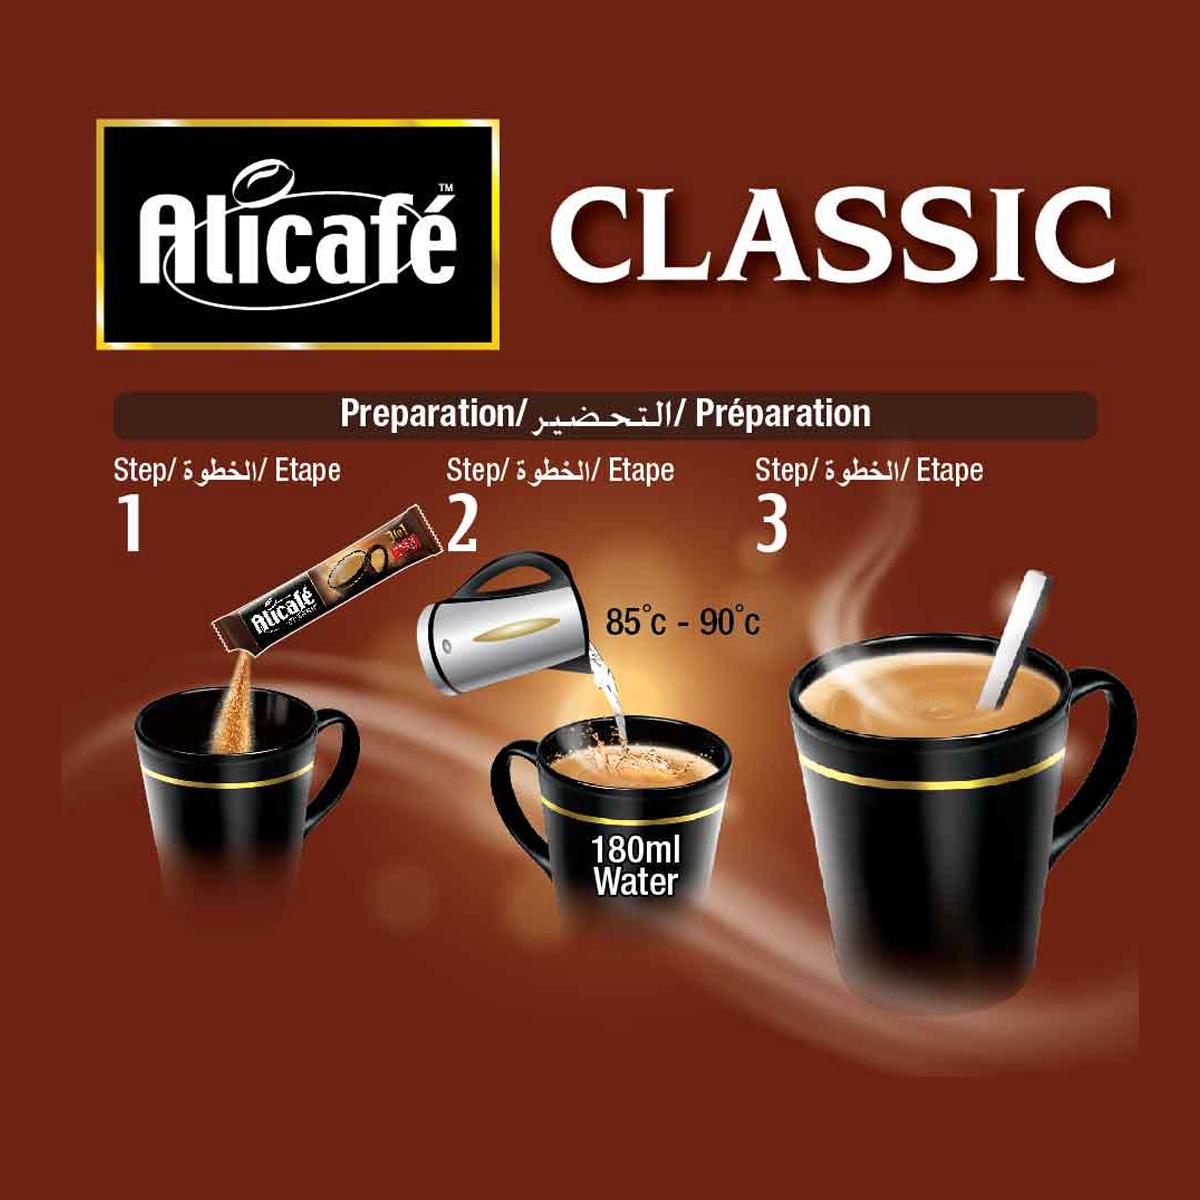 Alicafé Classic 3in1 Instant Coffee Box 20g (12 Sticks)